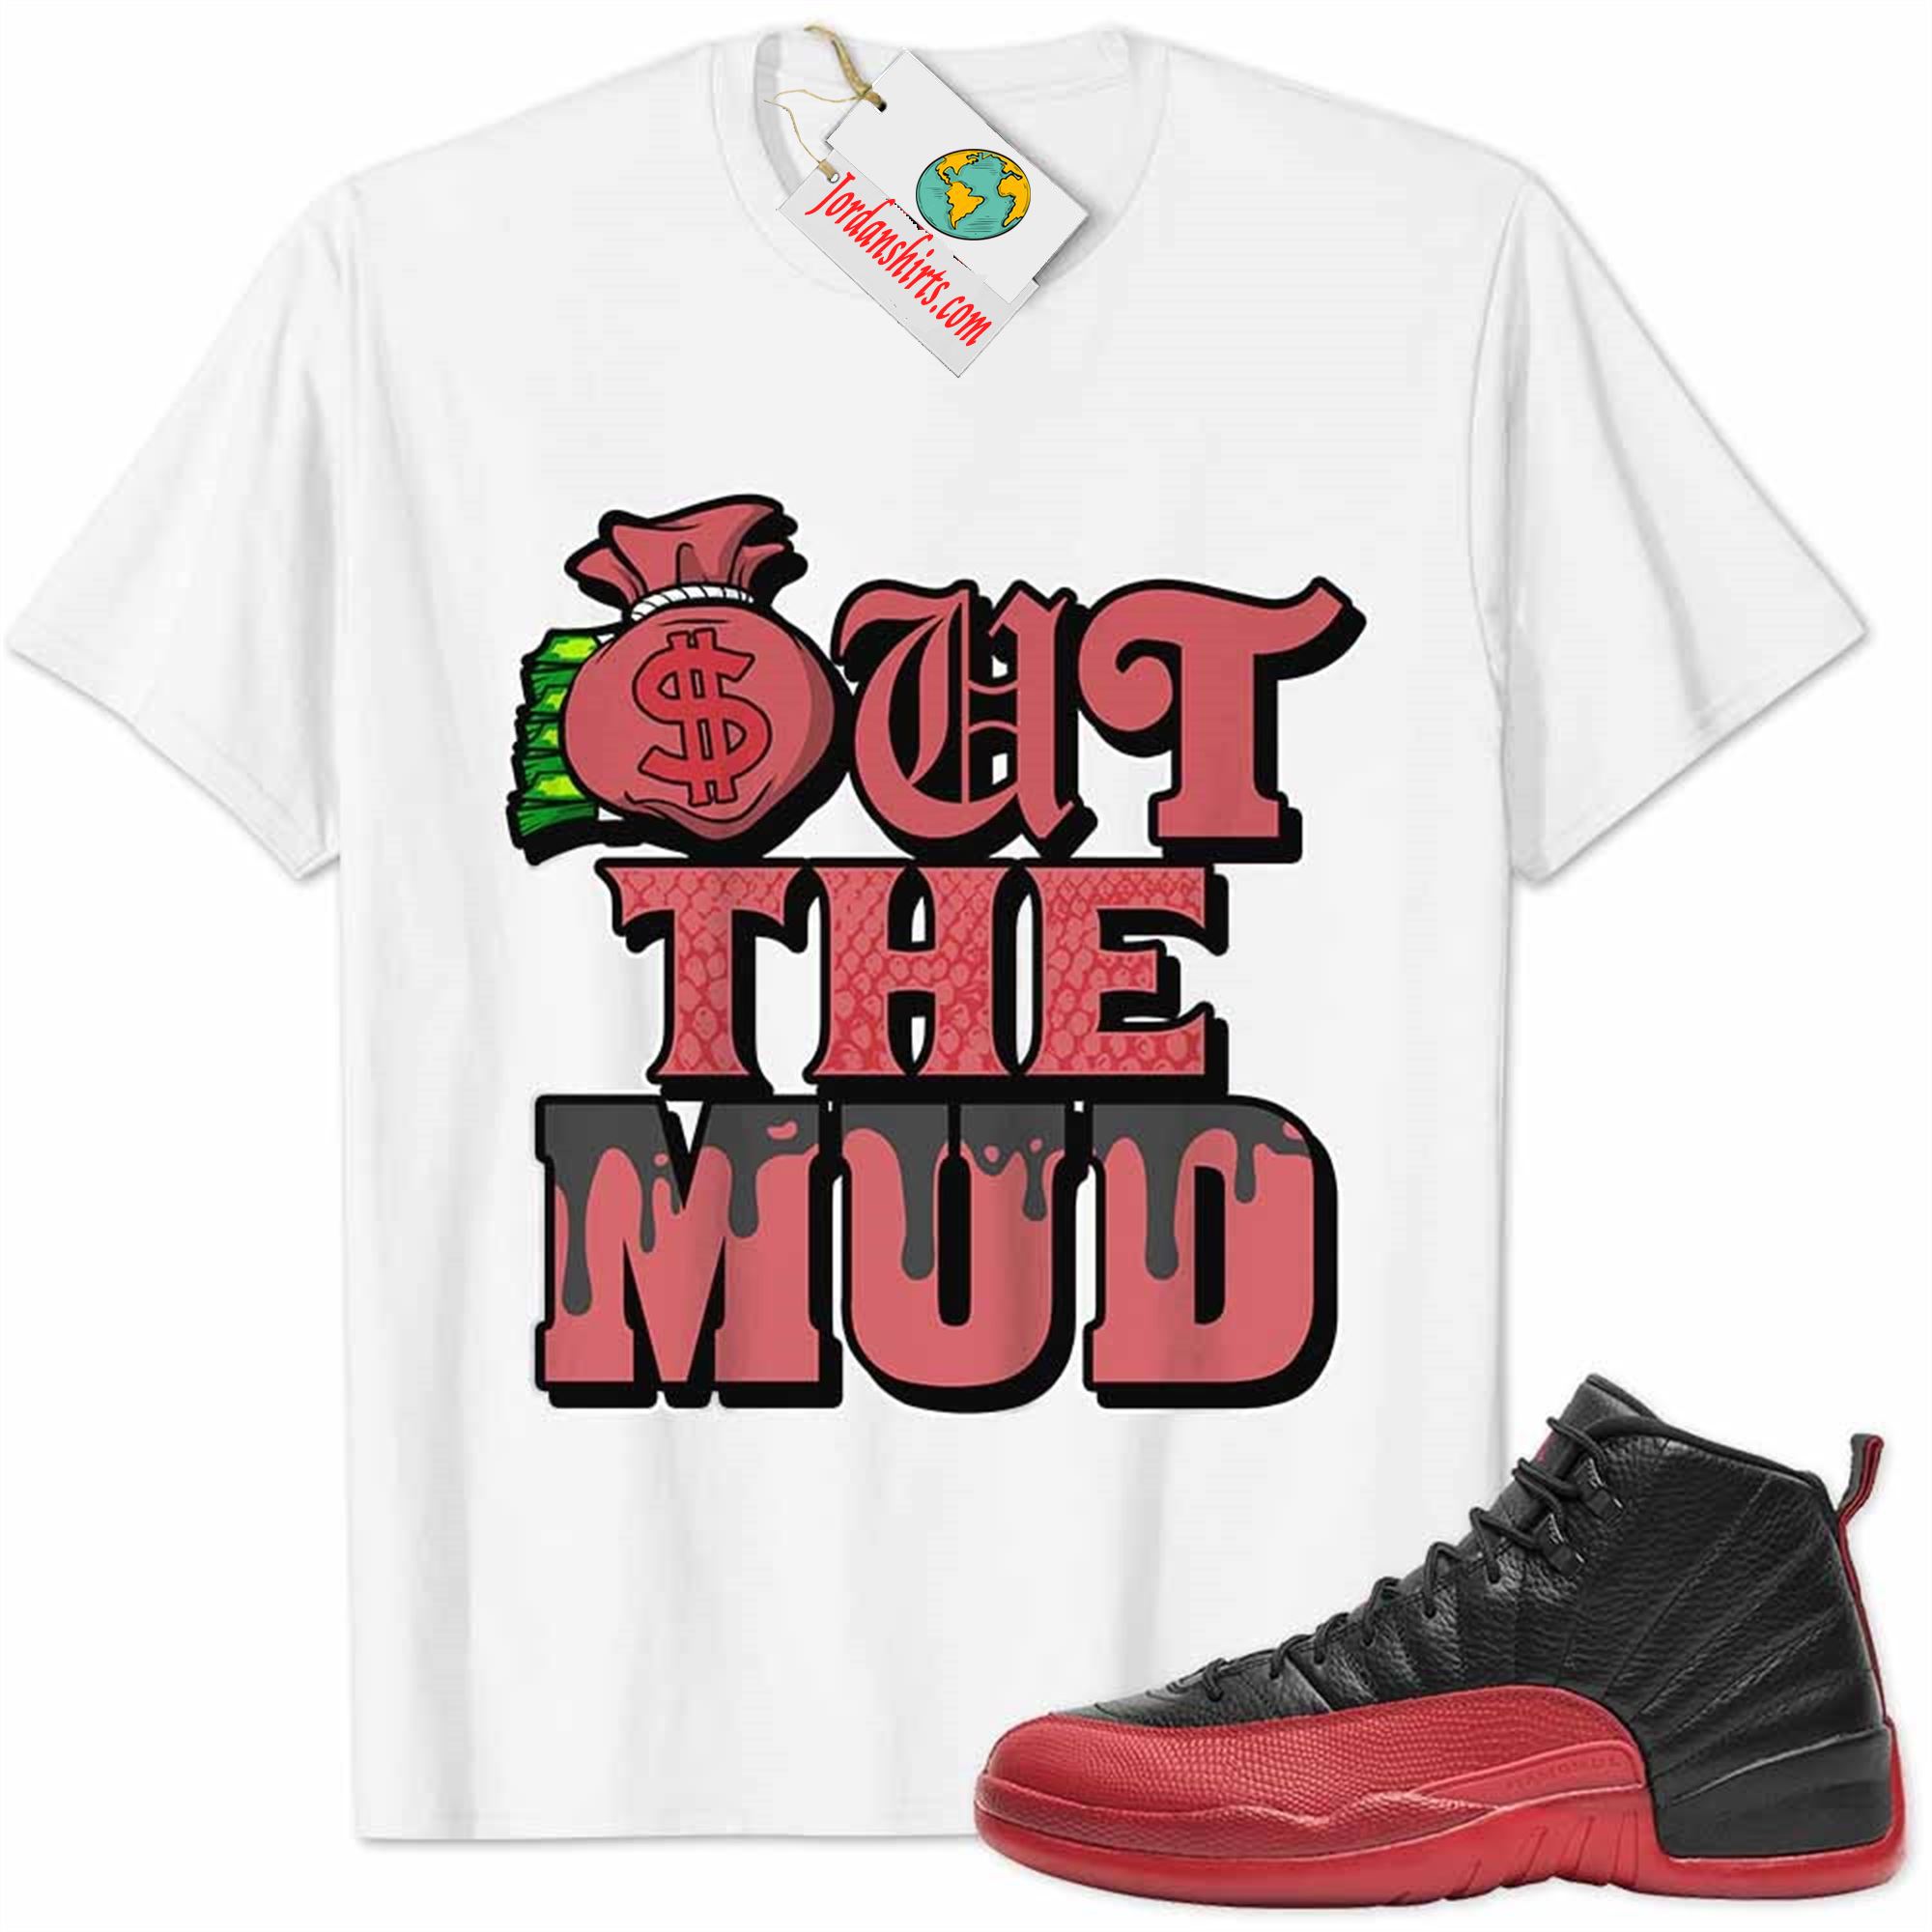 Jordan 12 Shirt, Jordan 12 Flu Game Shirt Out The Mud Money Bag White Size Up To 5xl